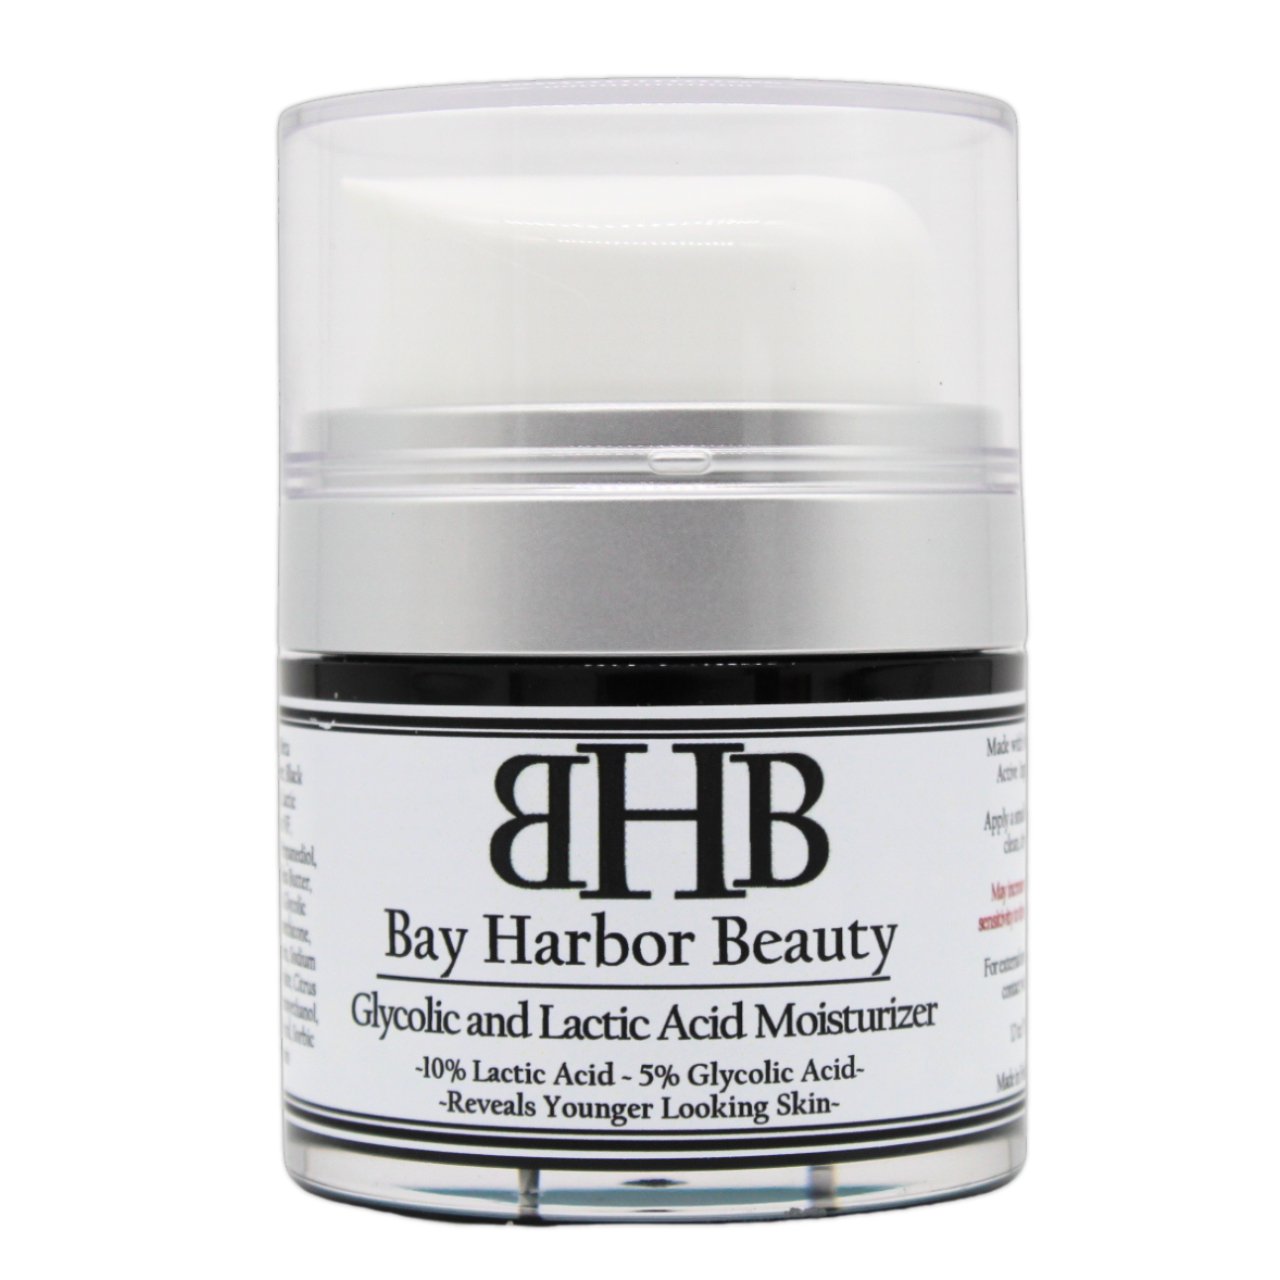 Glycolic & Lactic Acid Moisturizer - Bay Harbor Beauty